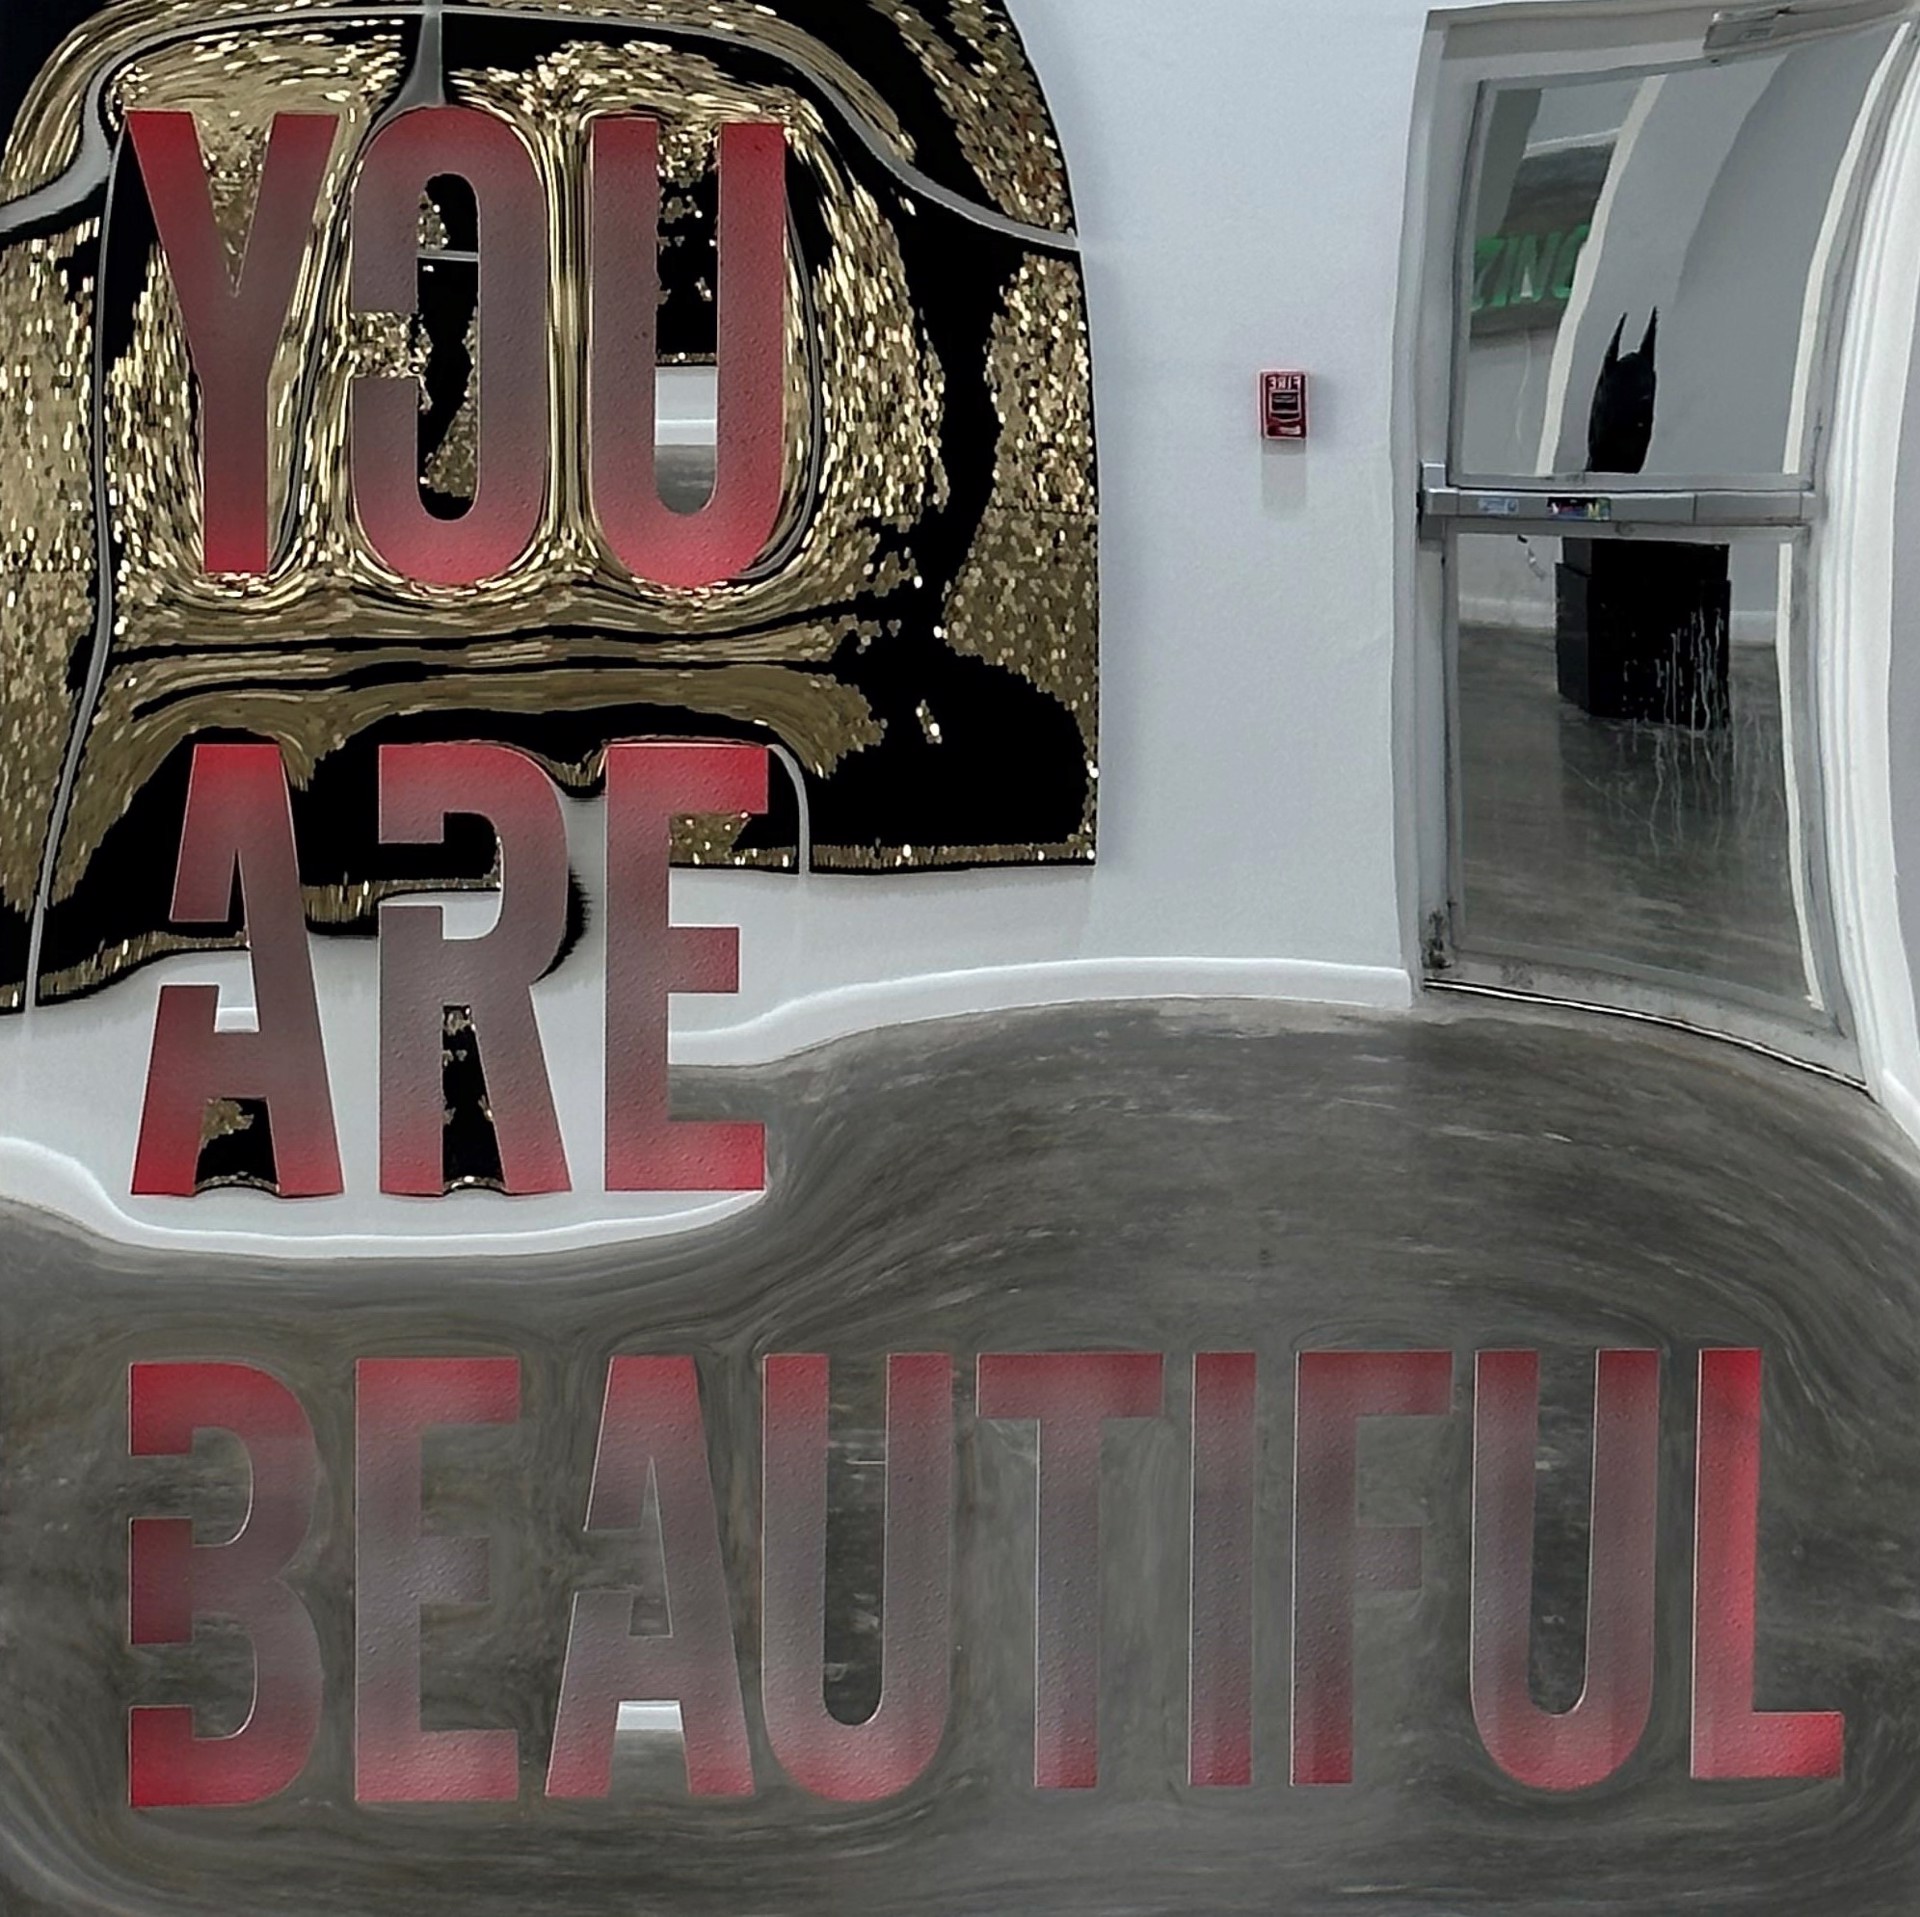 "You Are Beautiful" by Affirmative Mirrors Installation by Elena Bulatova